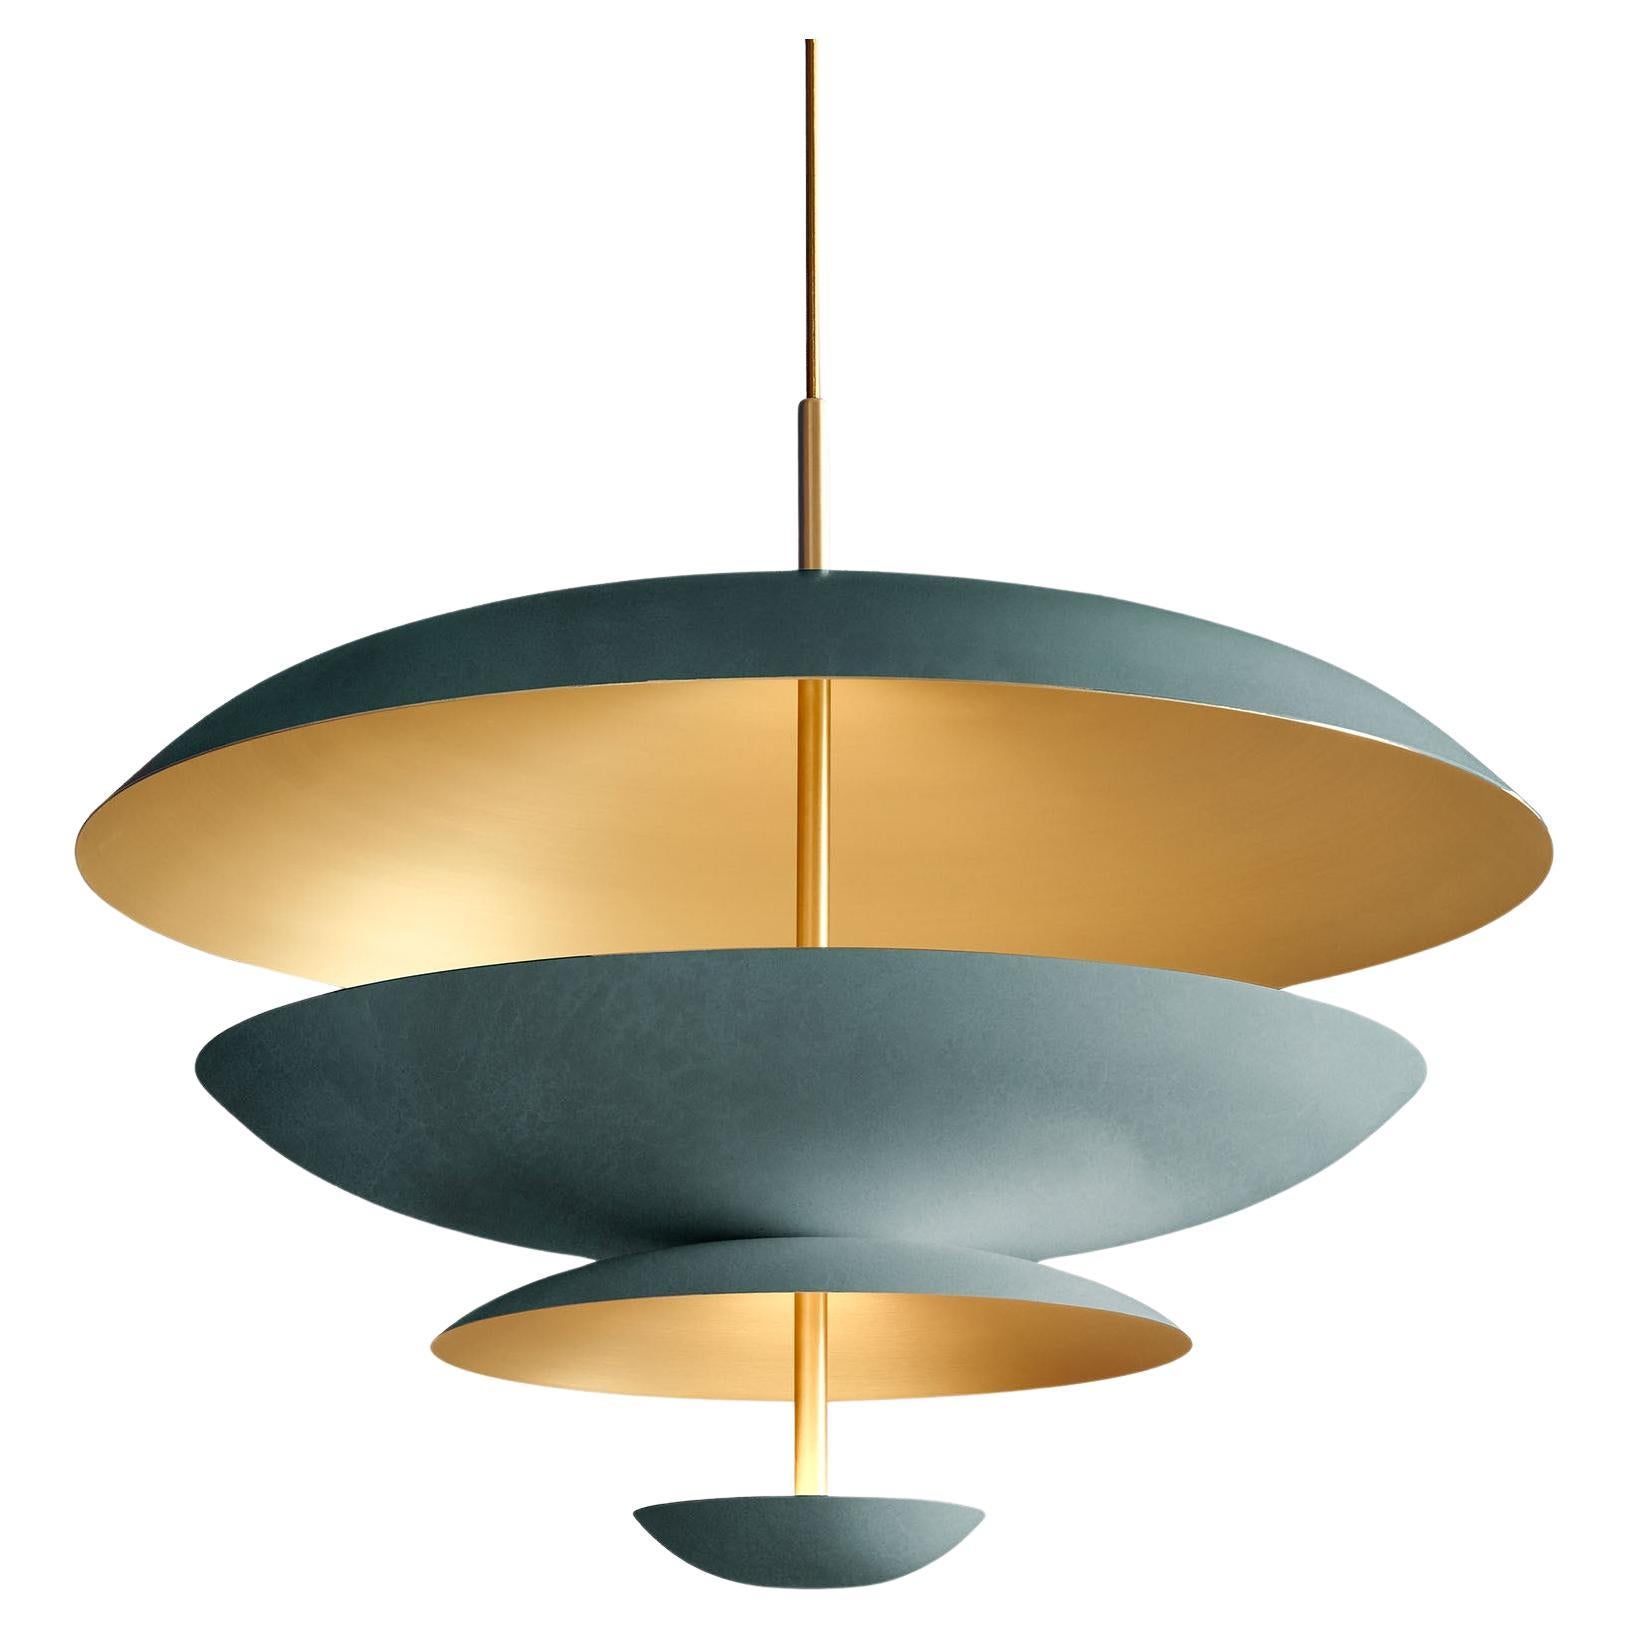 'Cosmic Verdigris Chandelier 70' Handmade Verdigris Patinated Brass Ceiling Lamp For Sale